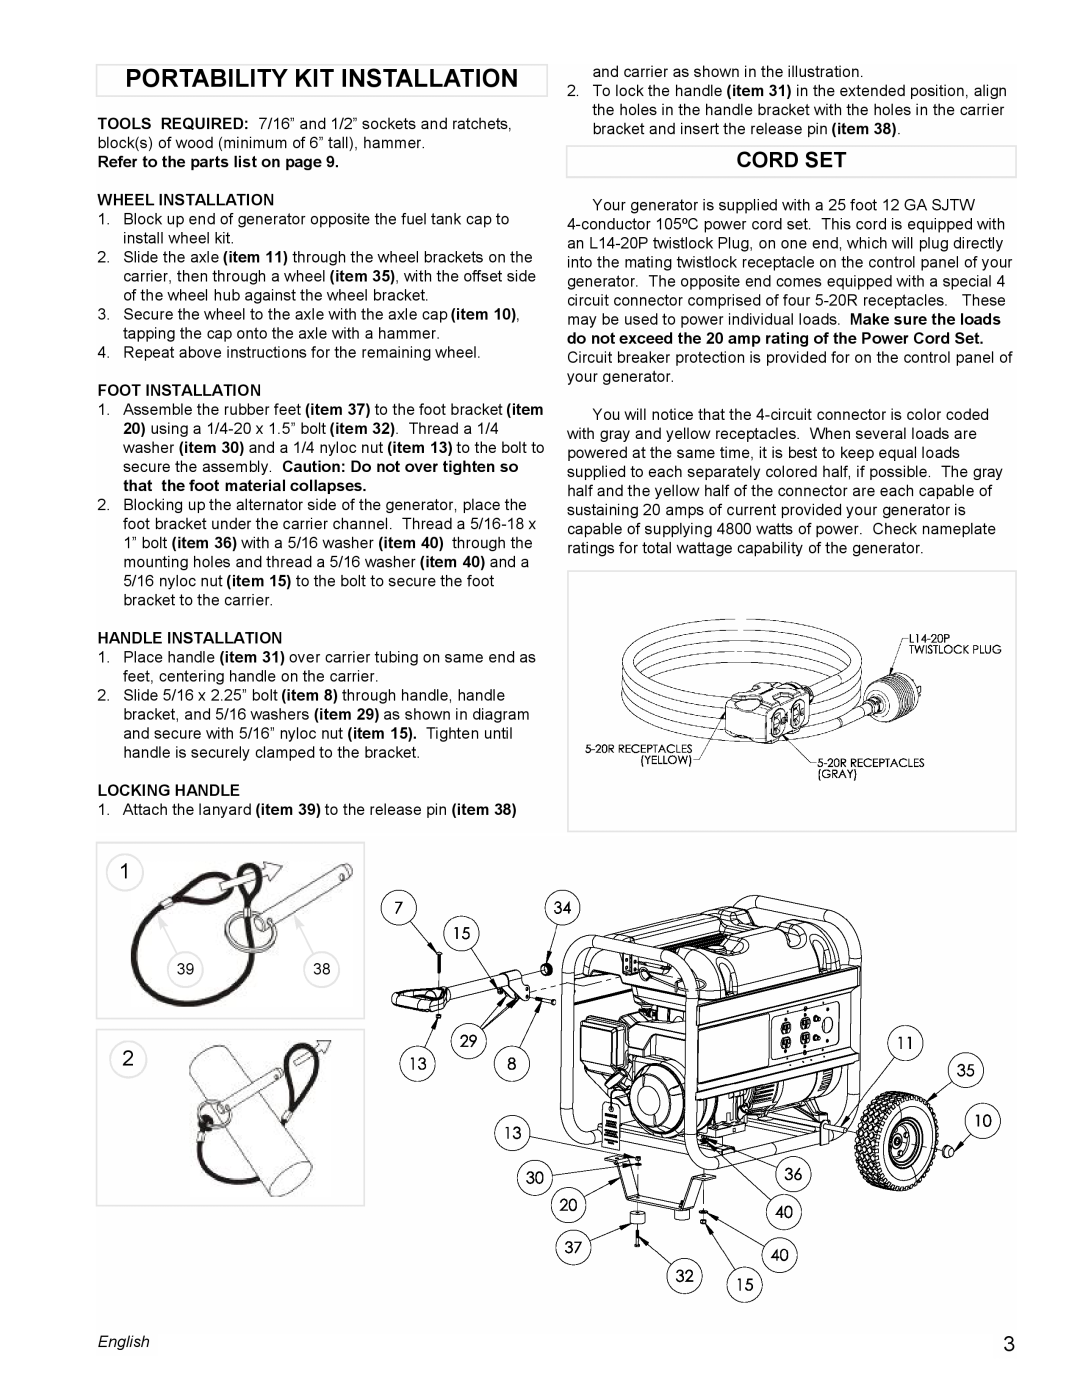 Powermate PM0545002 manual Portability Kit Installation, Cord Set, English 